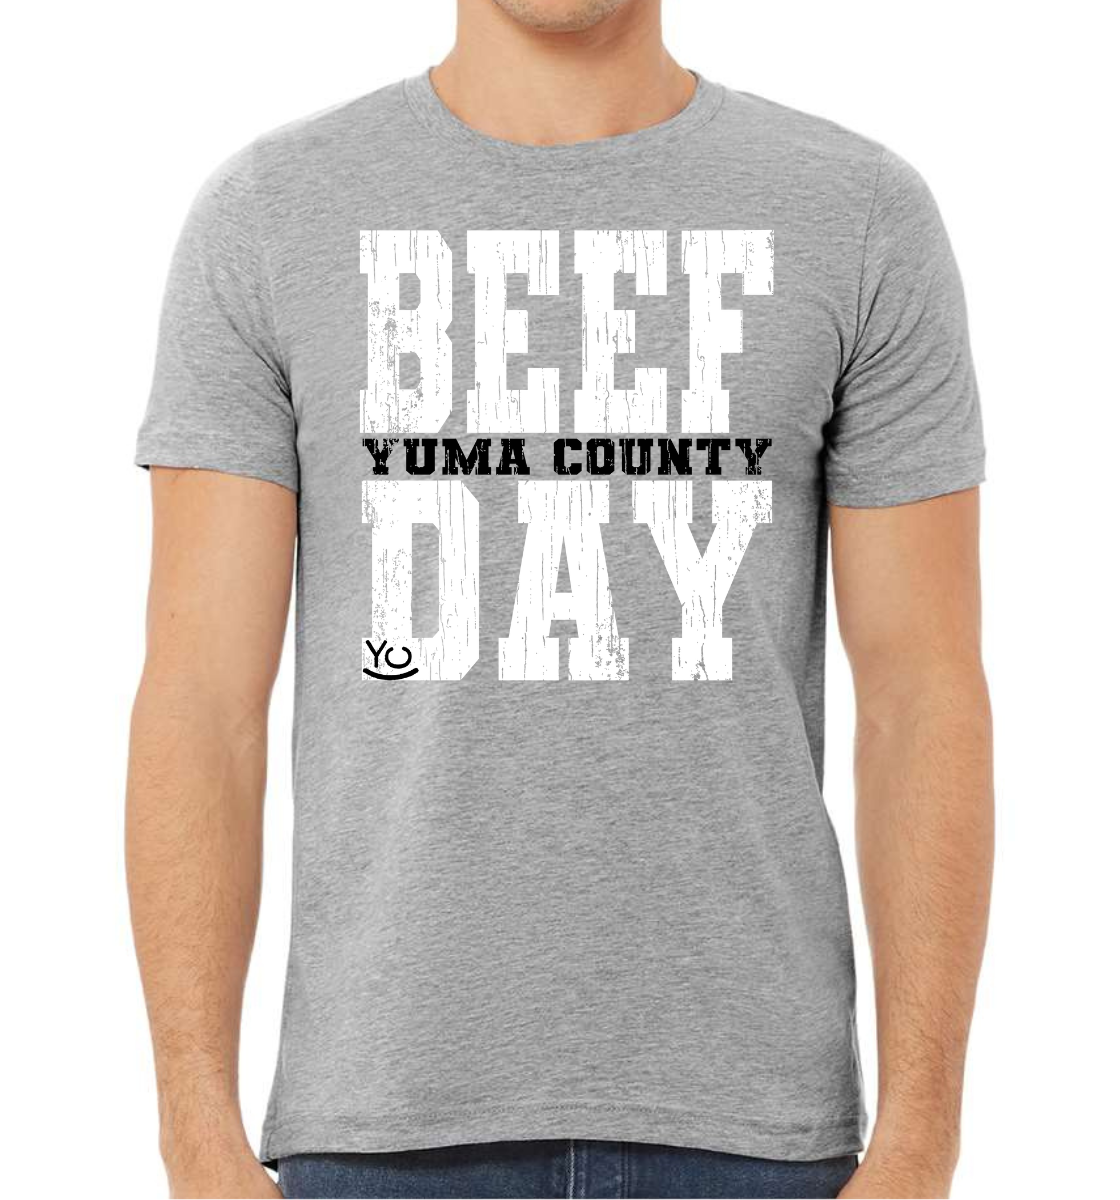 yuma county beef day unisex tee shirt - yuma county ag week!